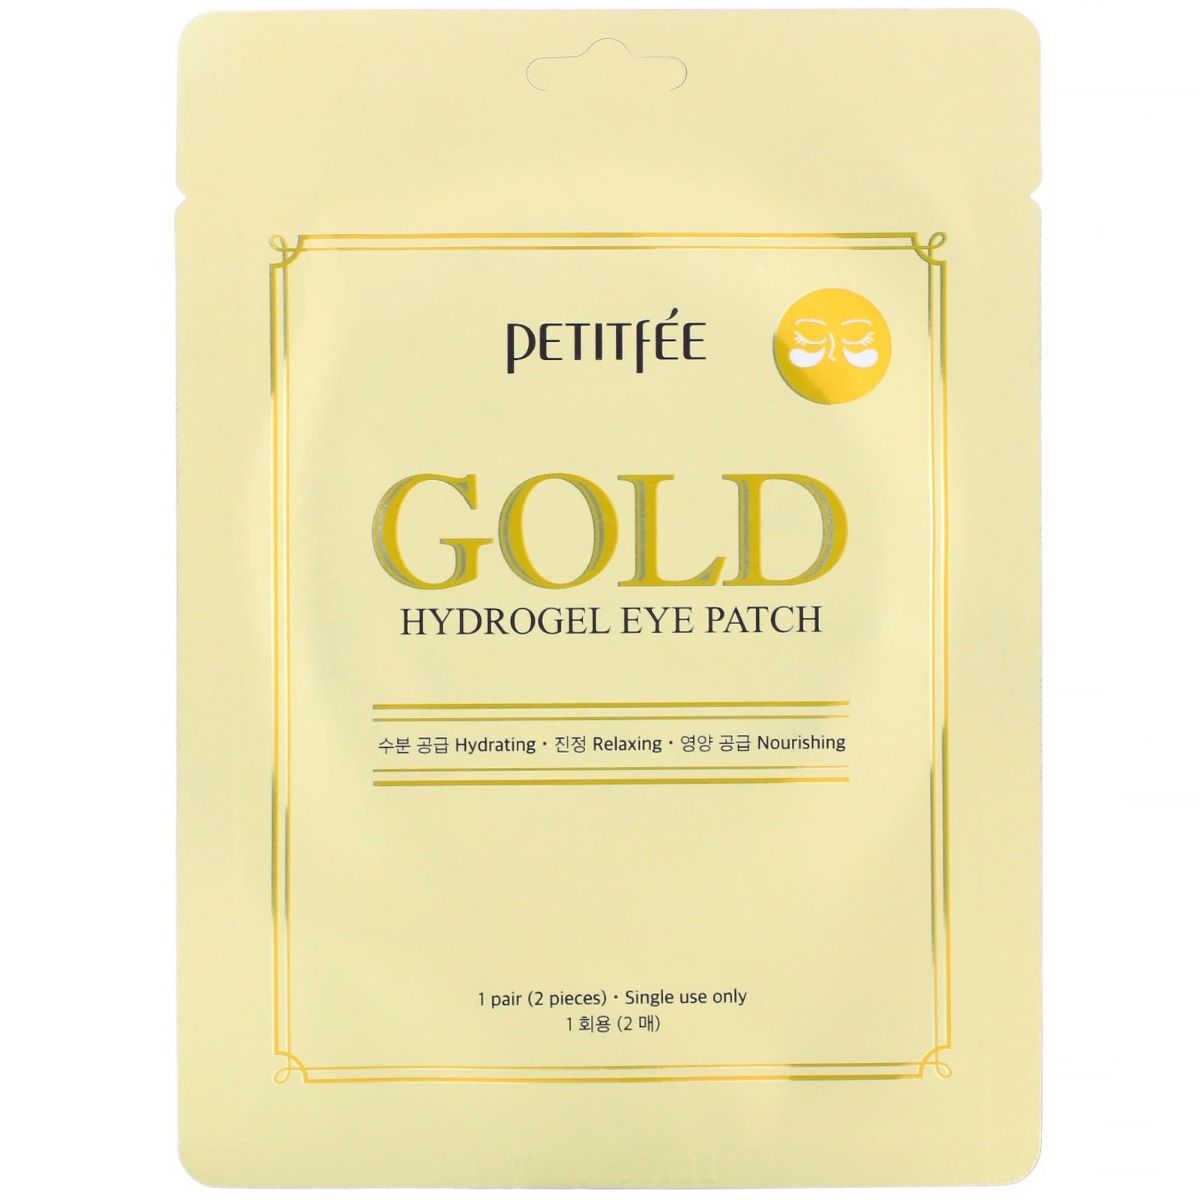 PETITFEE GOLD Hydrogel Eye Patches 2pcs